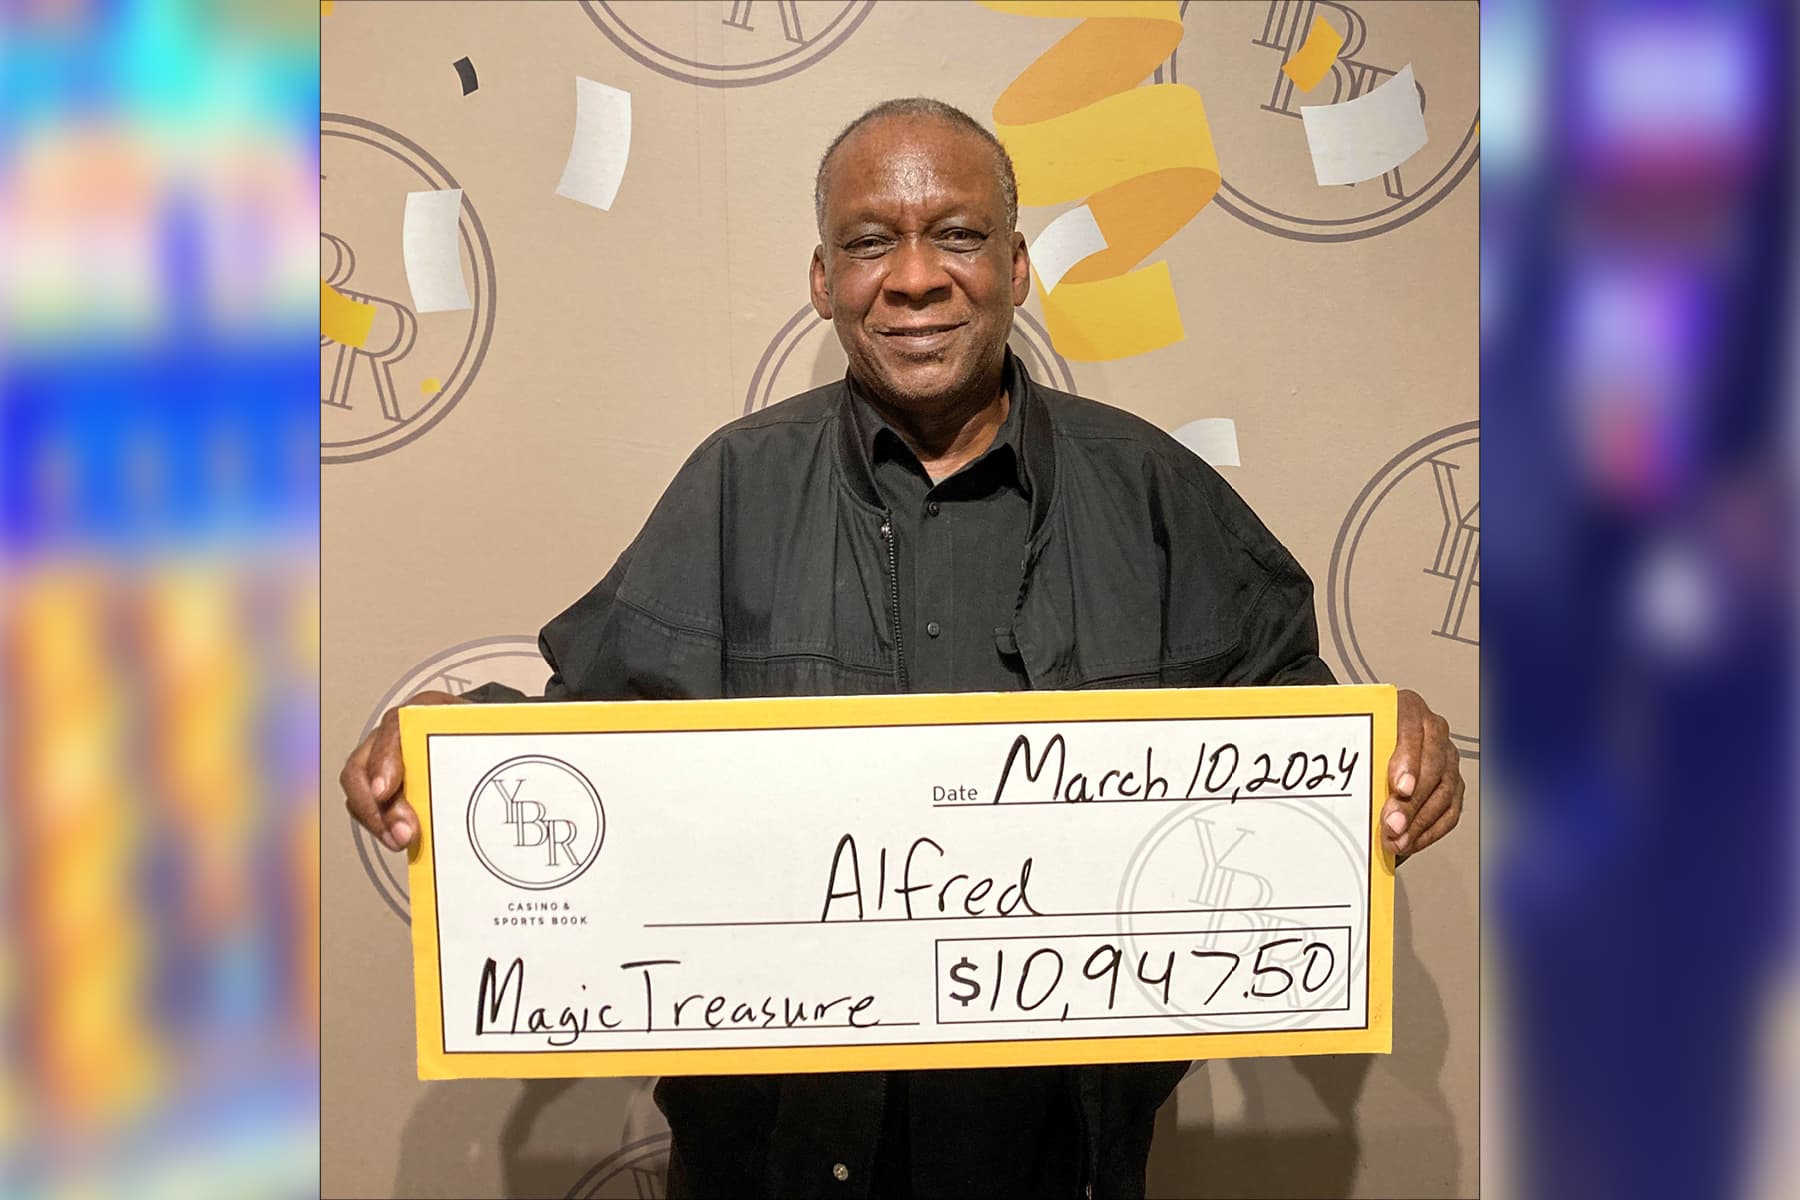 Alfred won $10,947